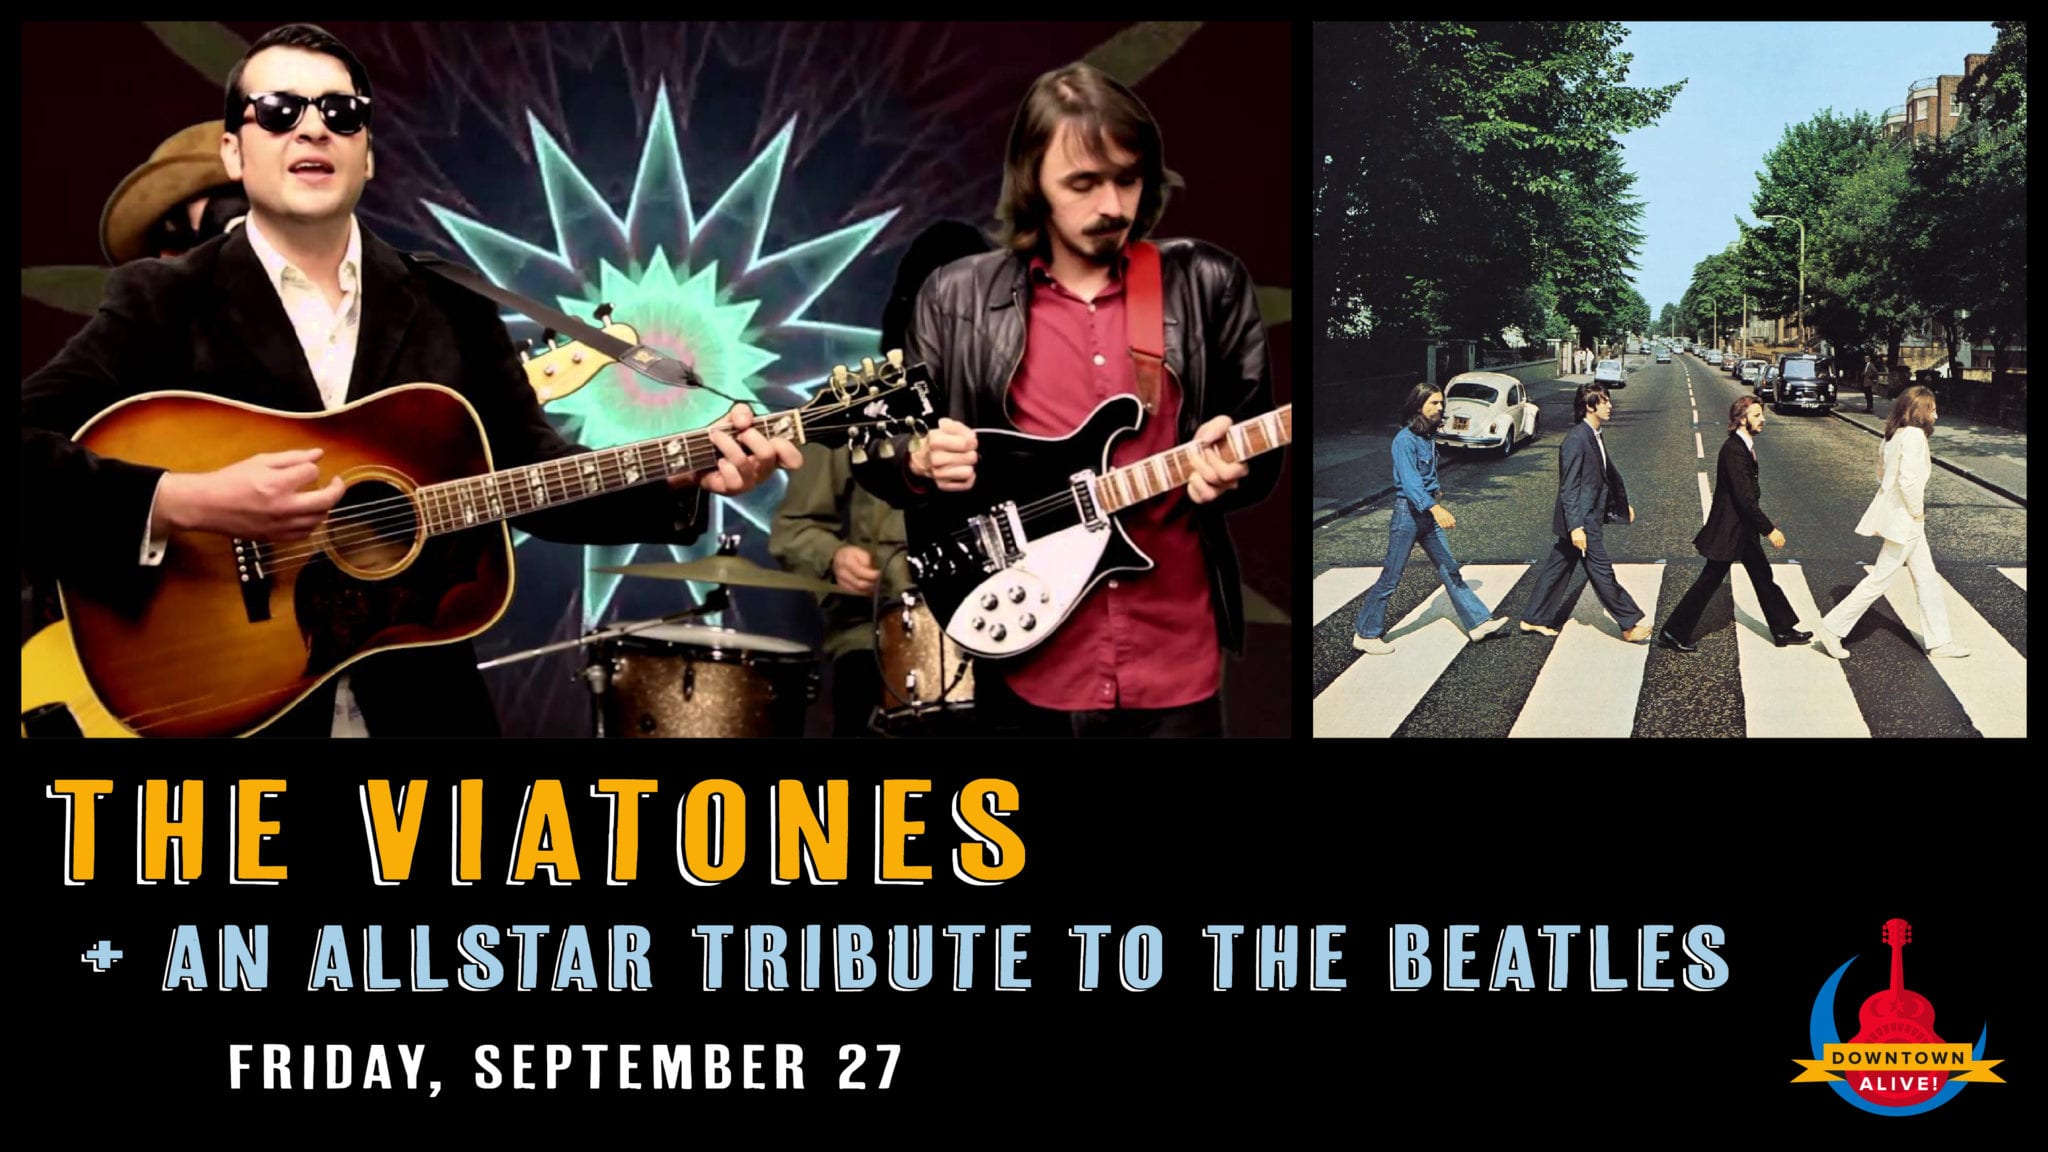 The Viatones + Beatles Tribute Friday, September 27